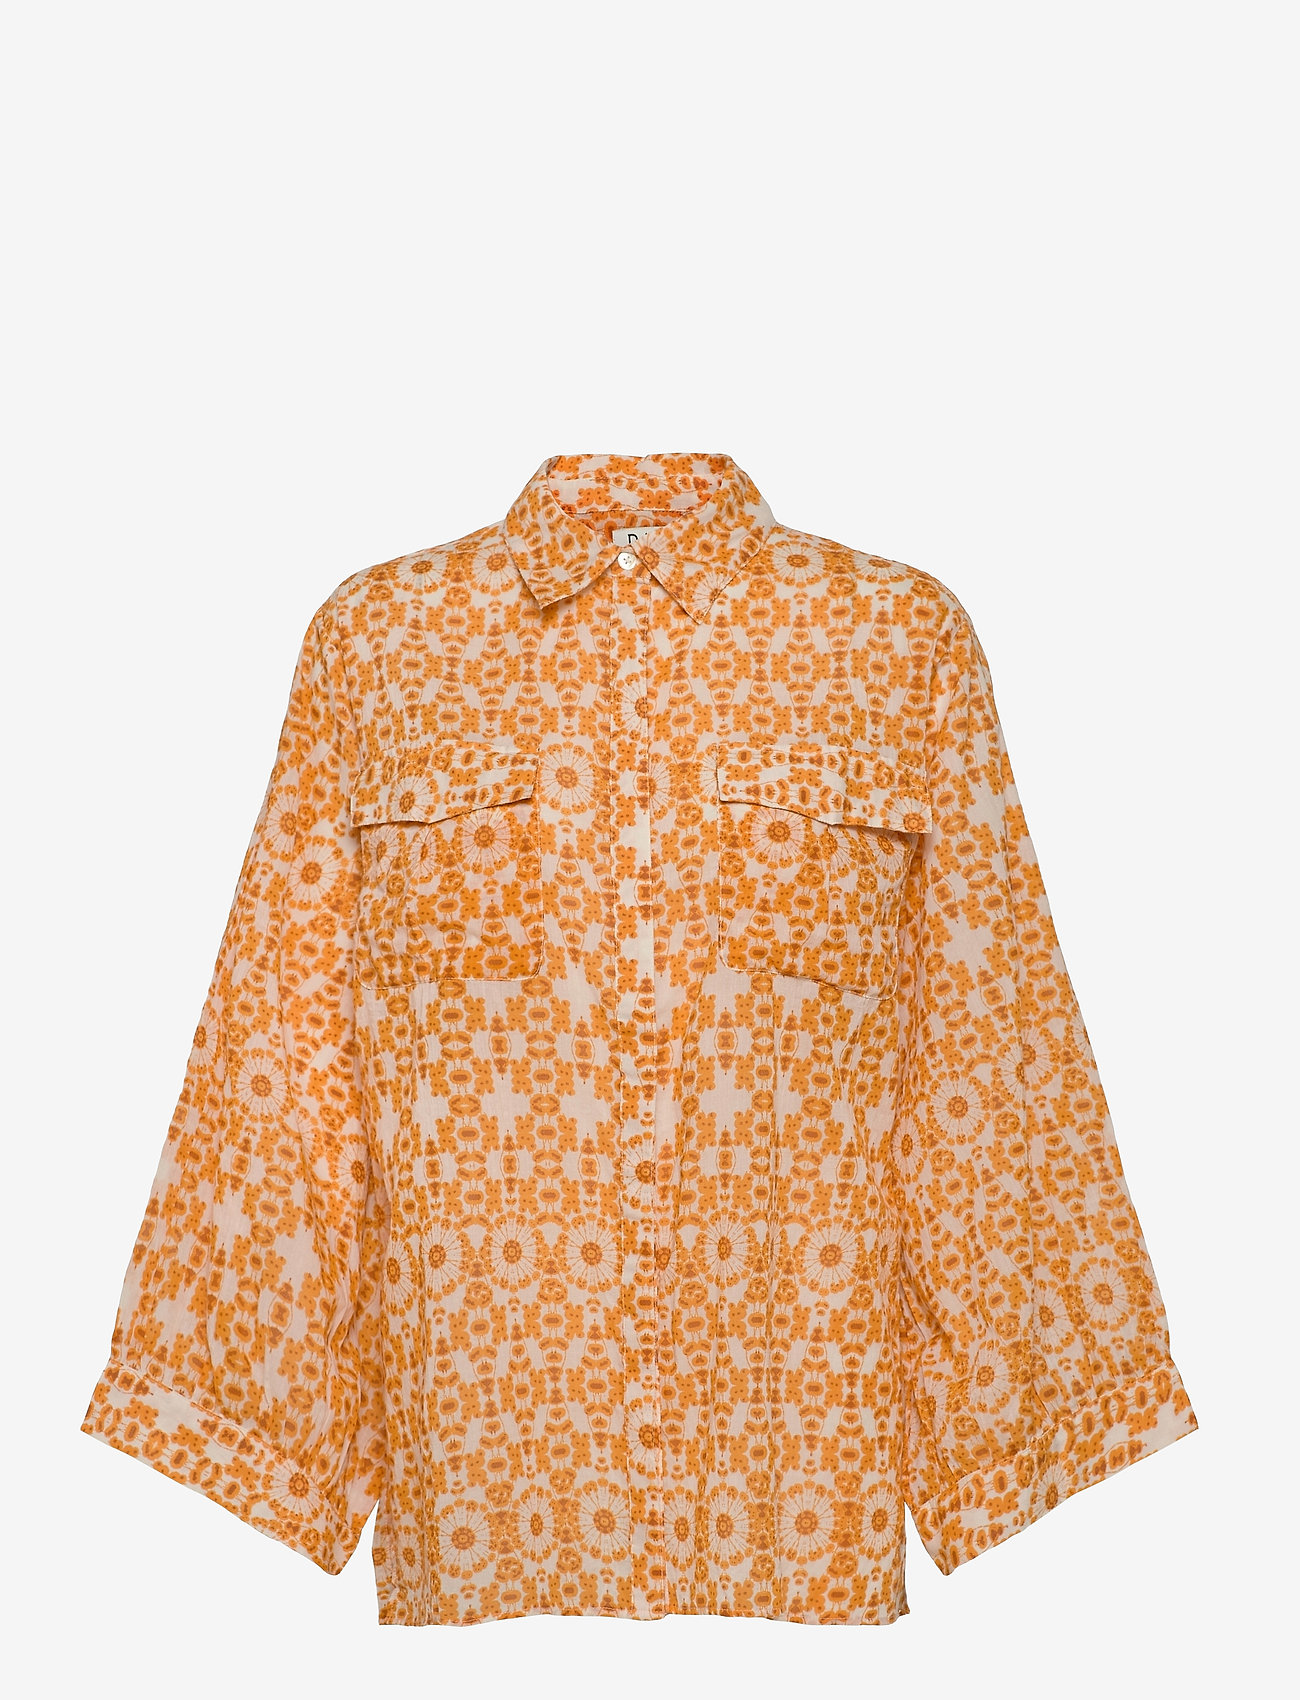 Day Birger et Mikkelsen - DAY Radiate - långärmade skjortor - apricot - 0